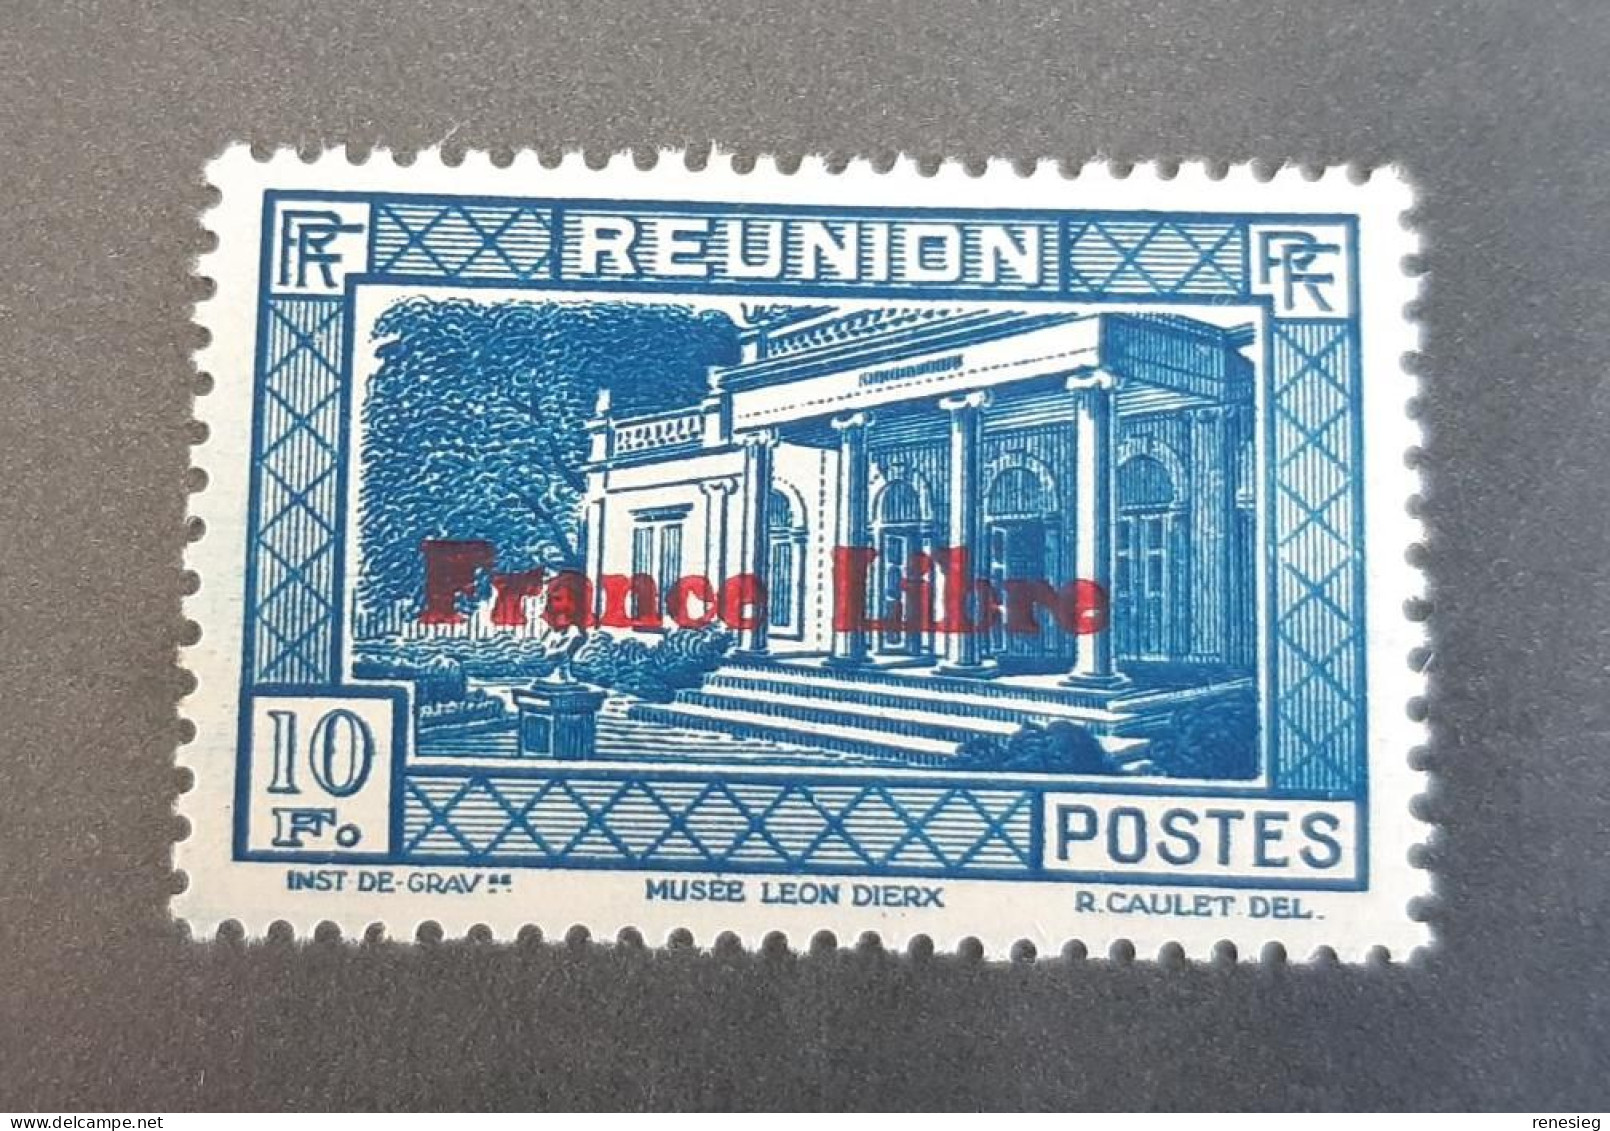 Réunion 1943 France Libre Yvert 214 MNH - Neufs